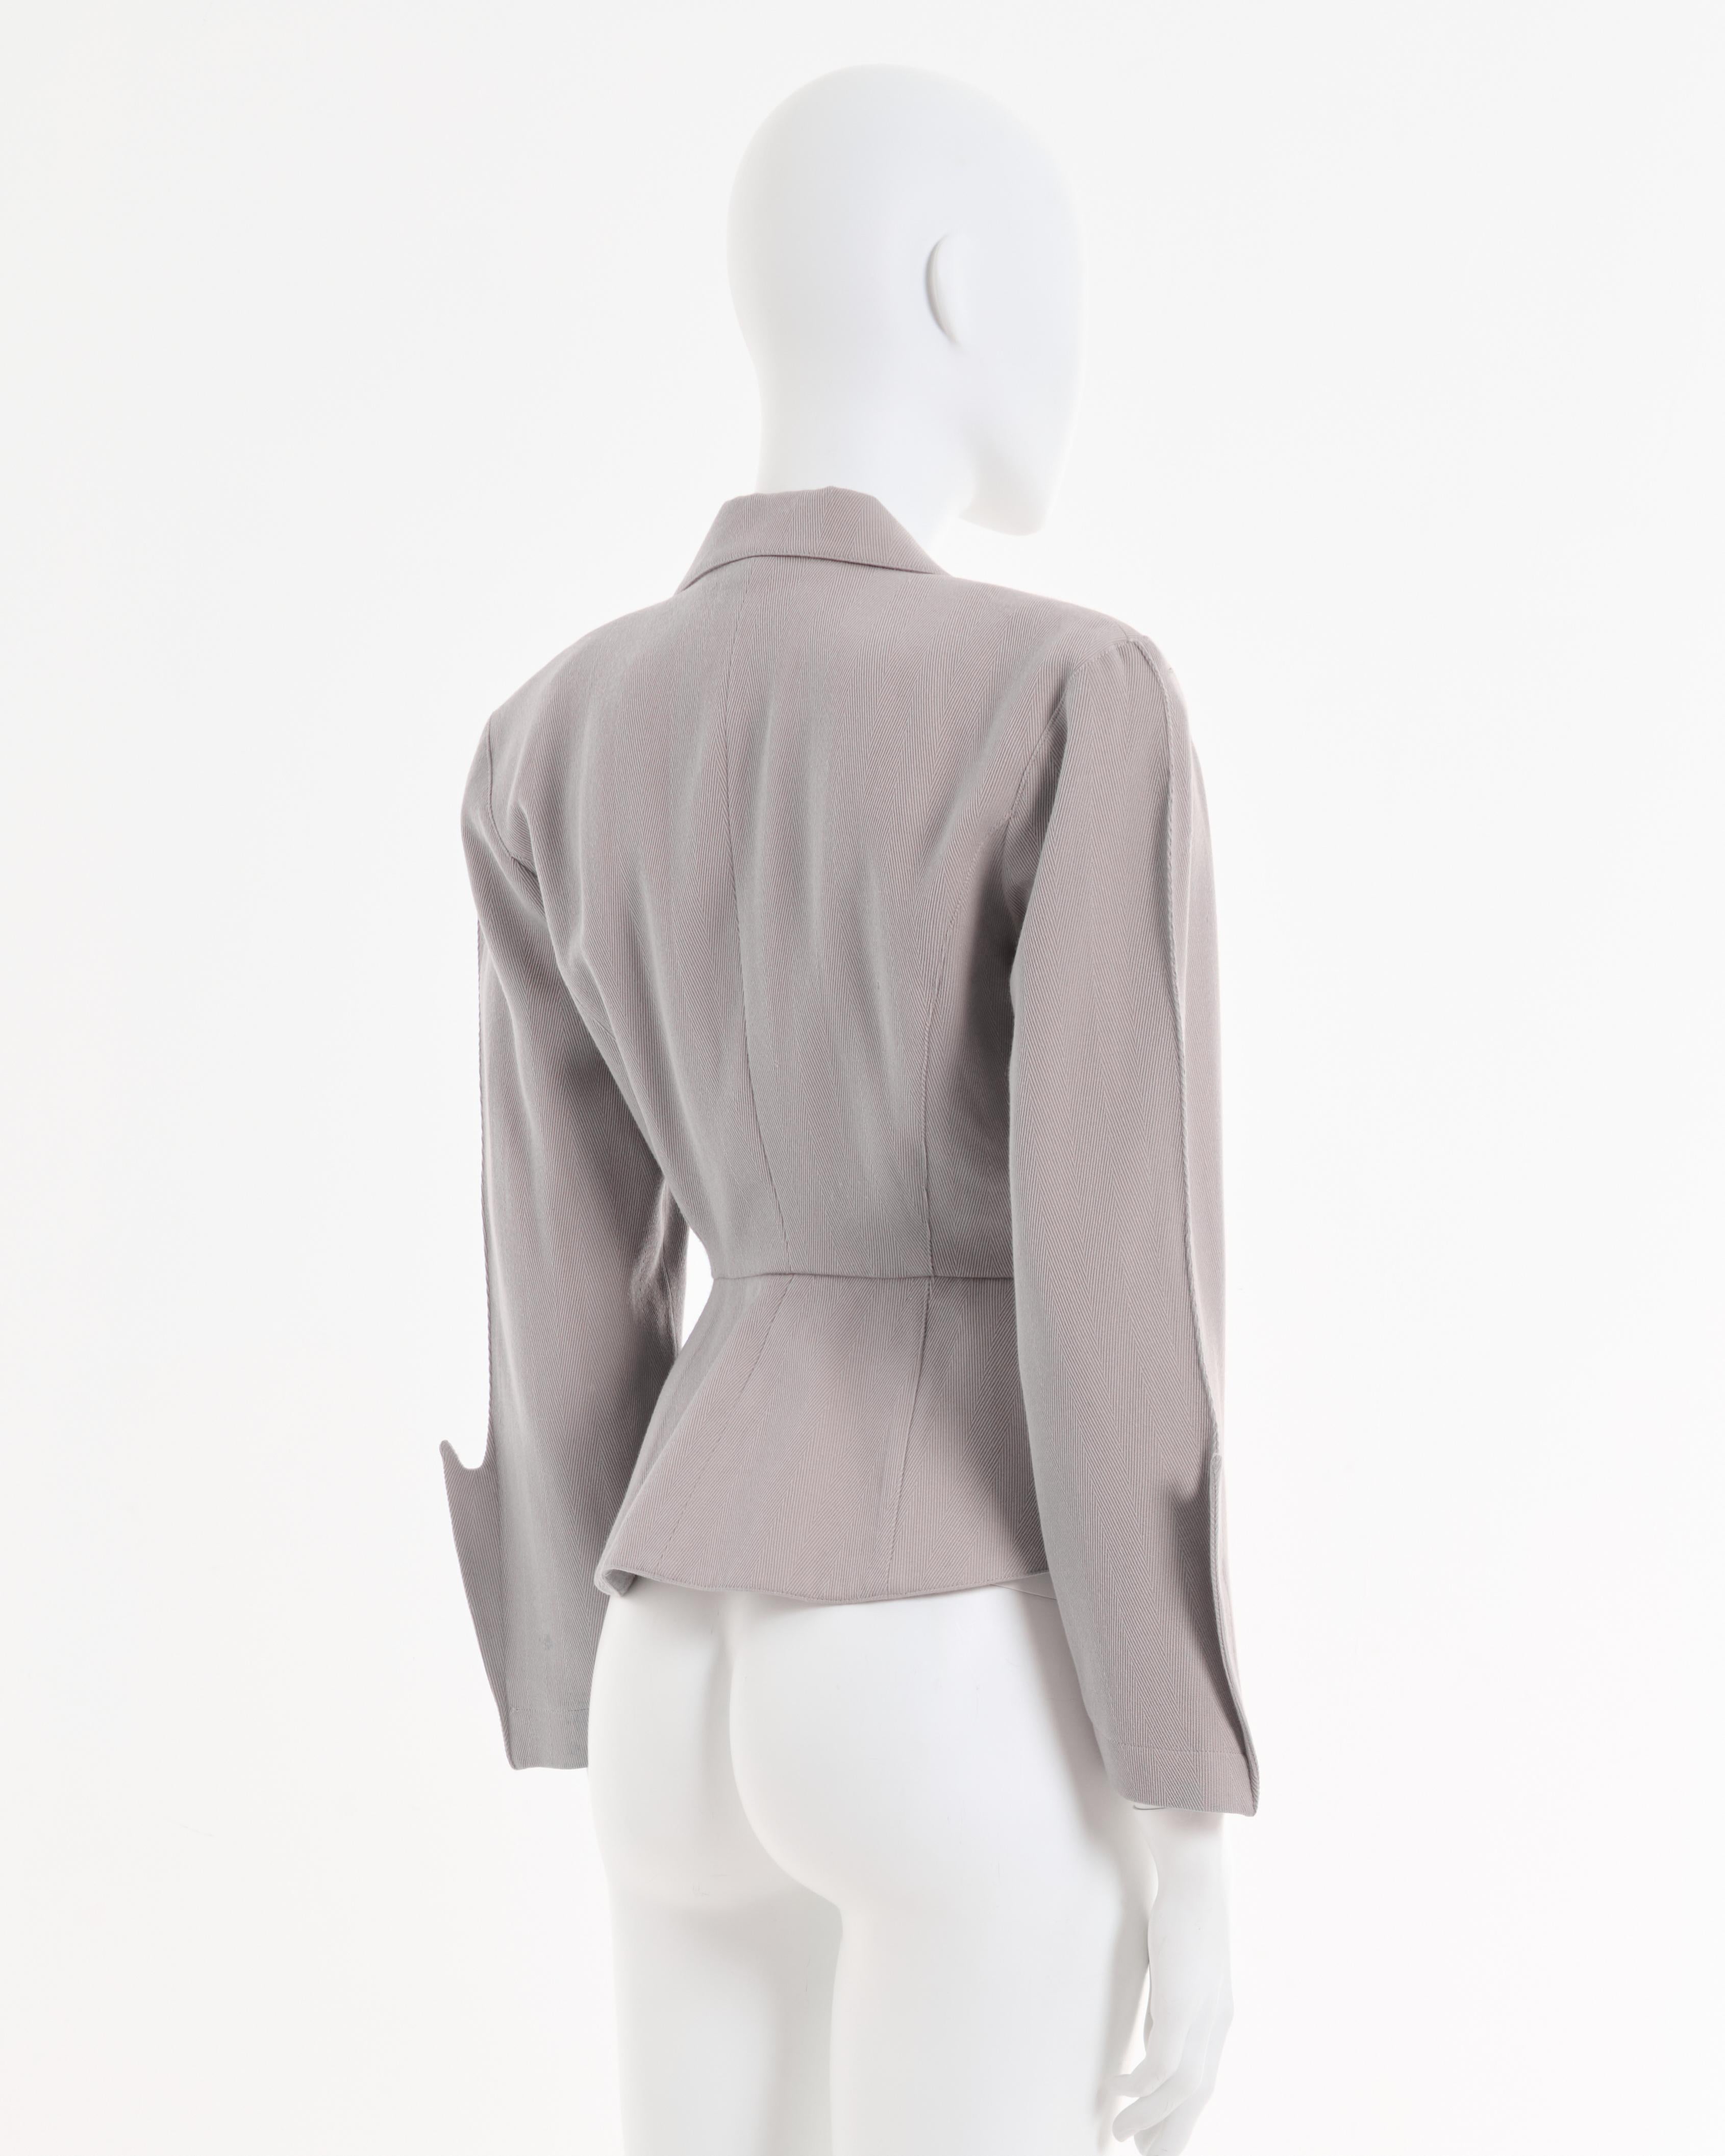 Thierry Mugler S/S 1989 'Les Atlantes' Beige shaped sculptural blazer jacket For Sale 1